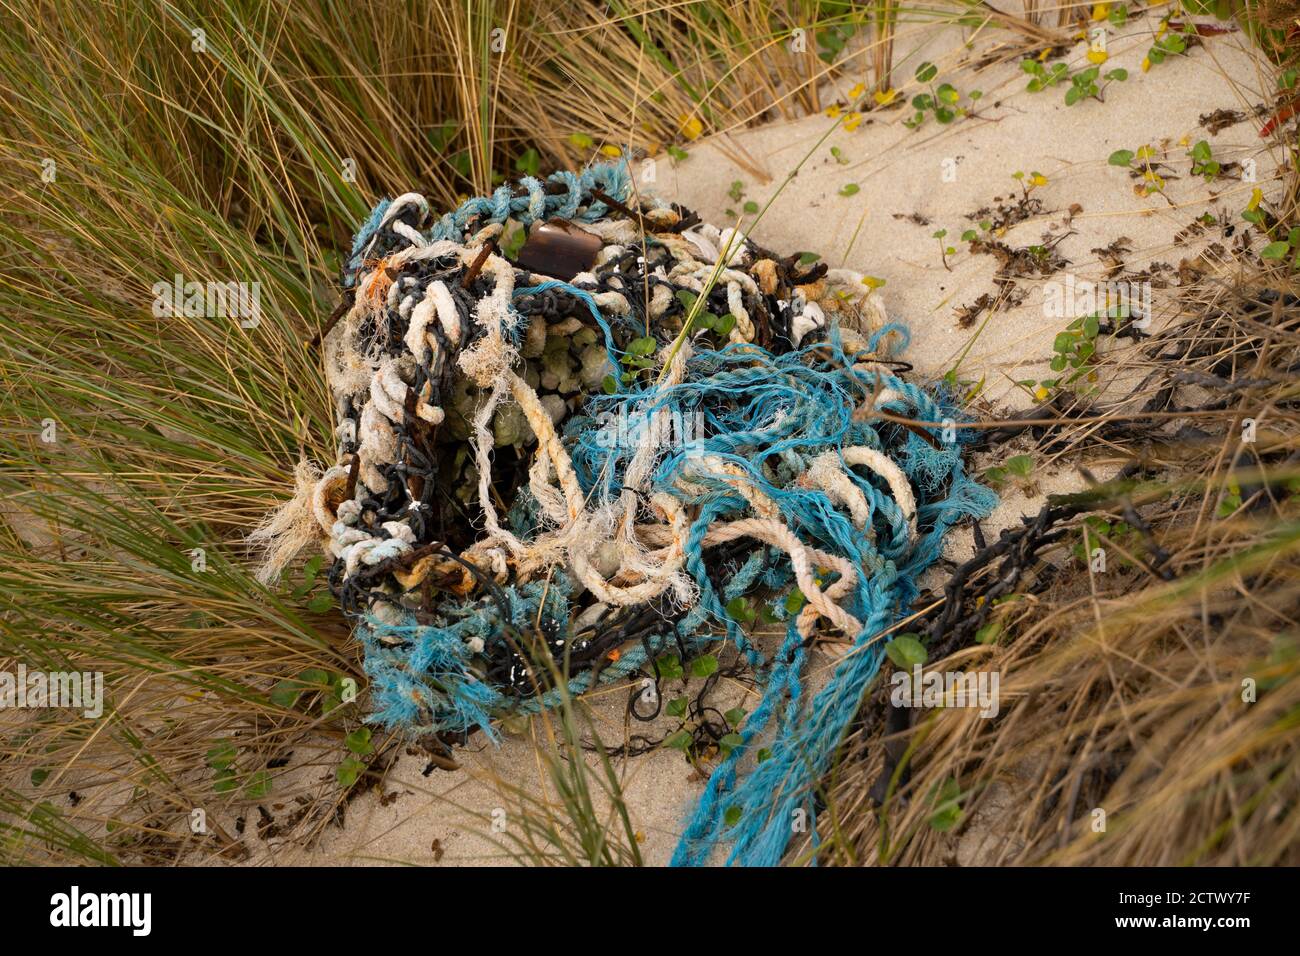 Waste netting, Tresco, Isles of Scilly. Stock Photo